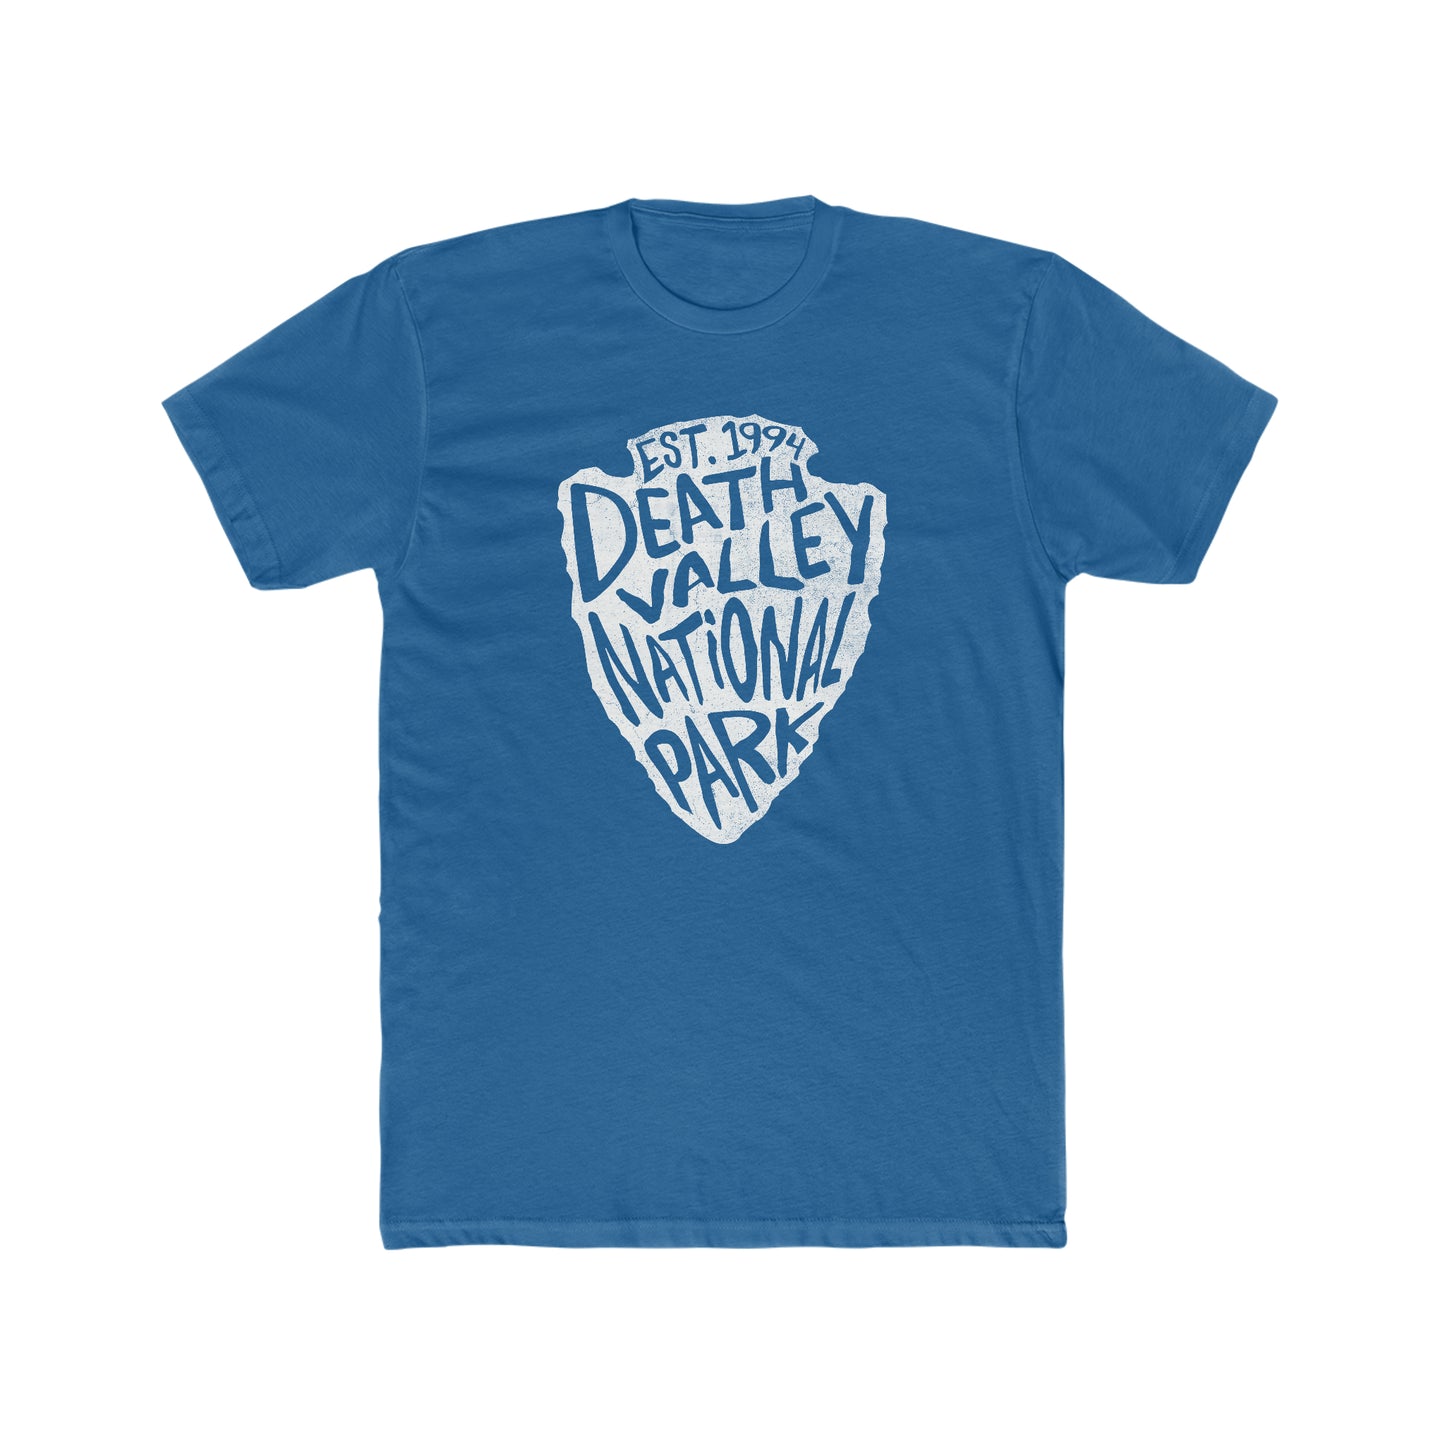 Death Valley National Park T-Shirt - Arrowhead Design